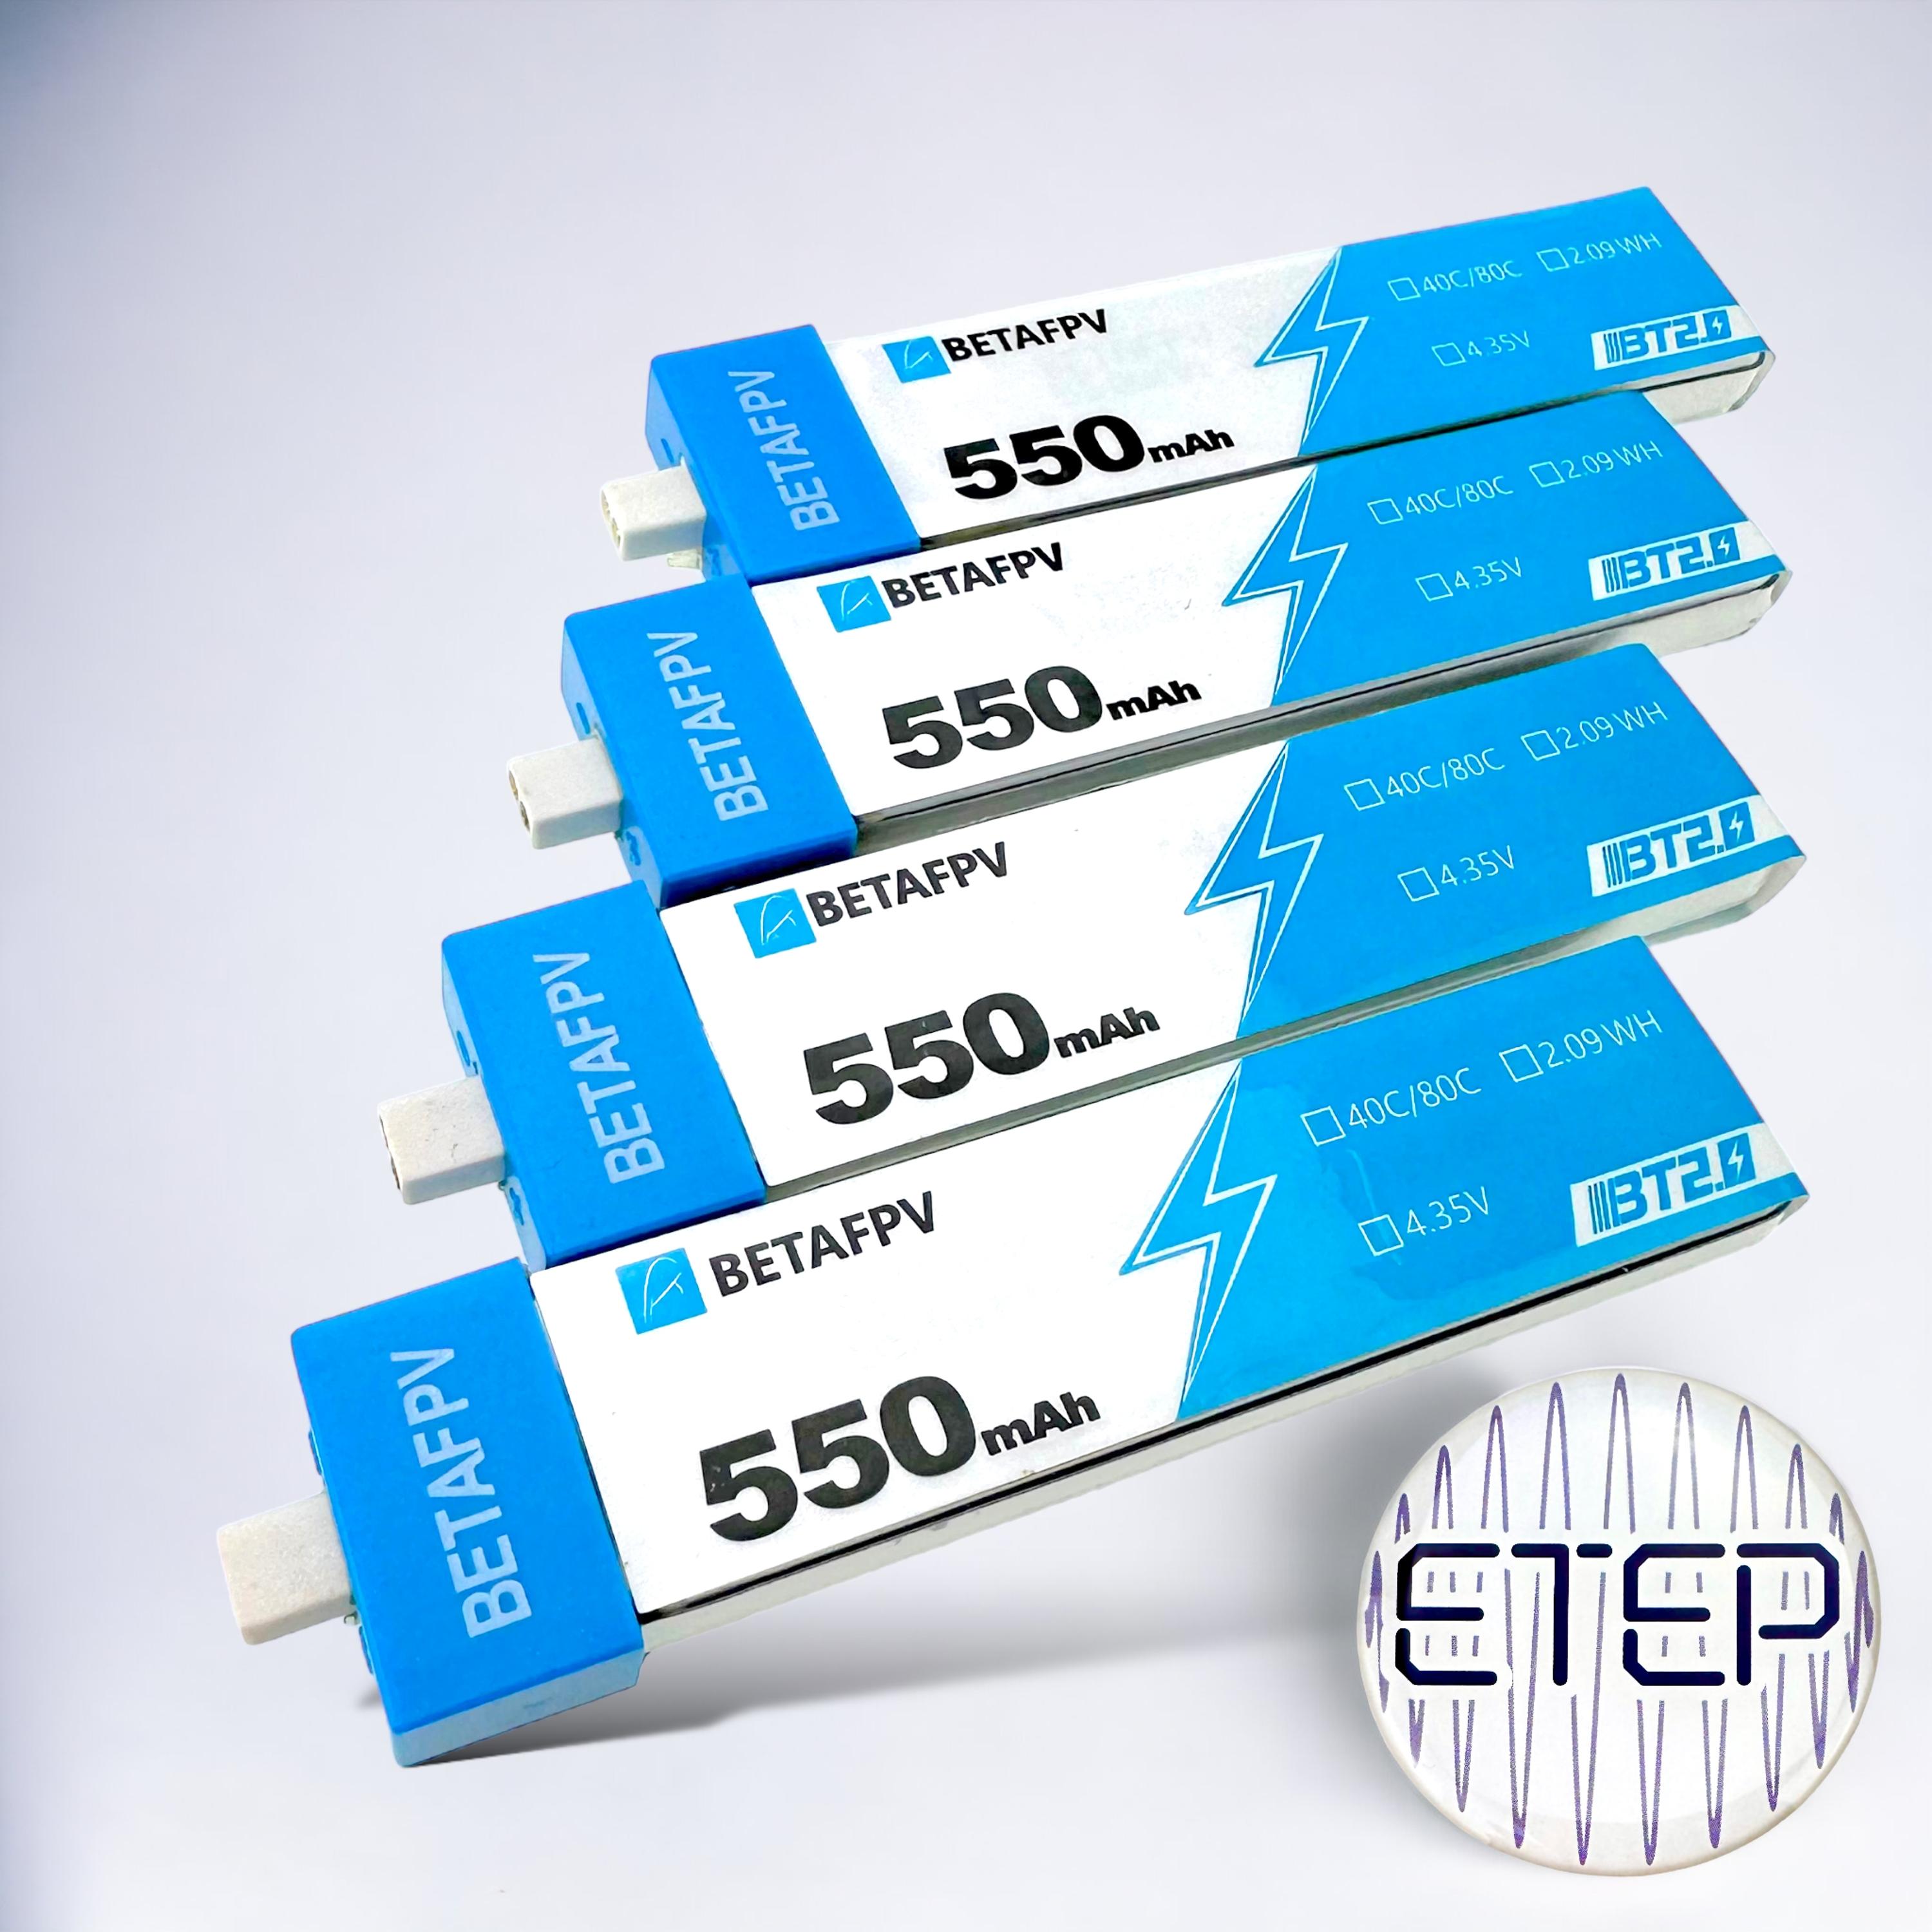 550mAh BT2.0 BetaFPV battery